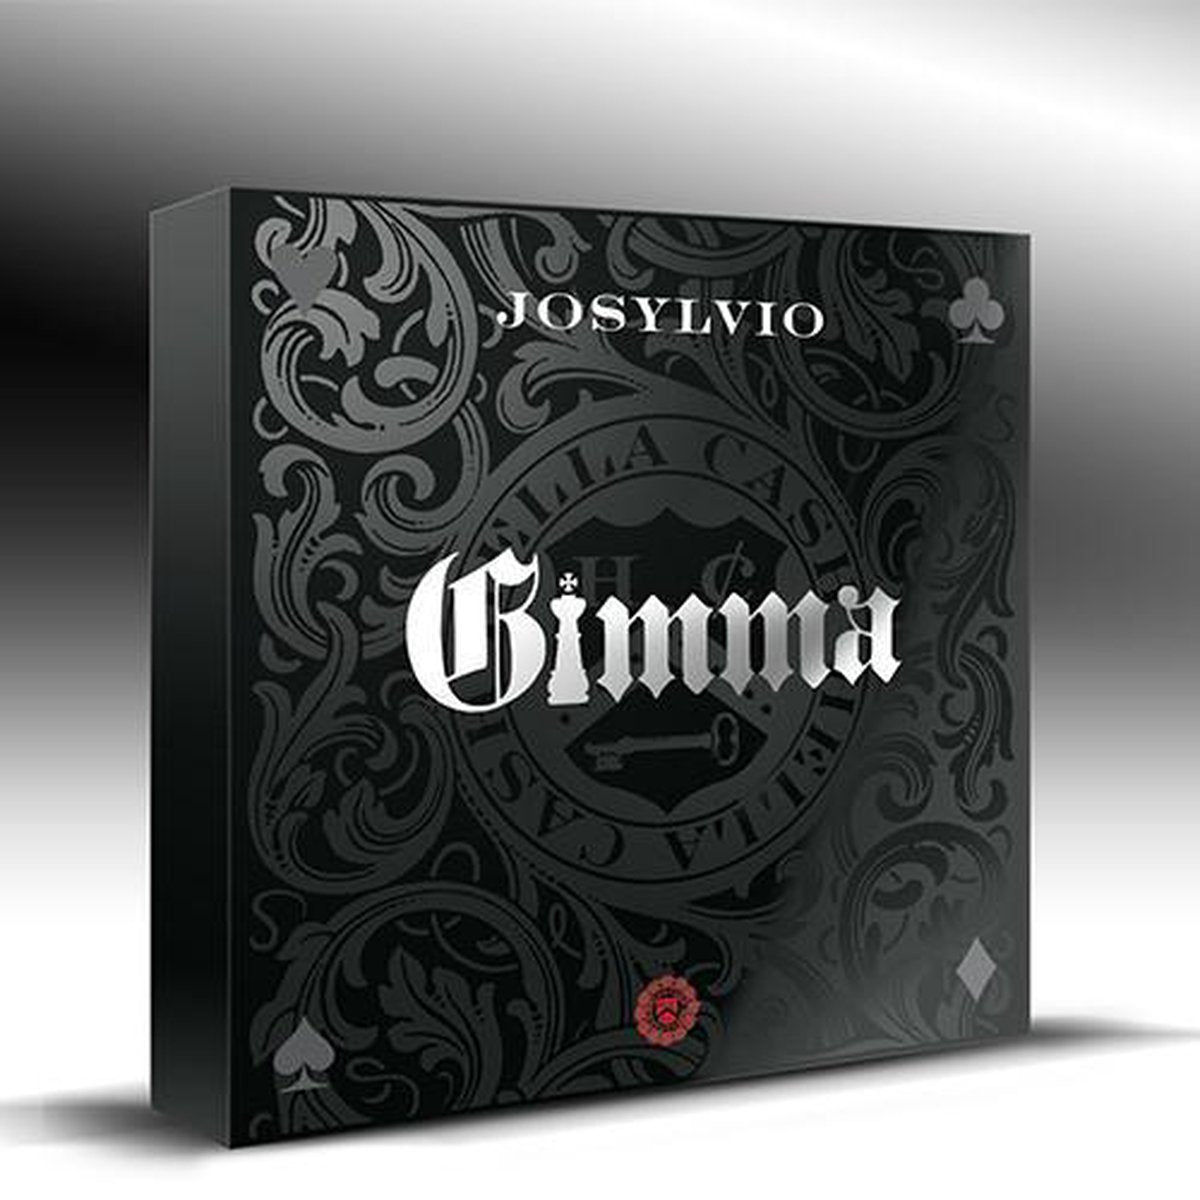 Gimma (CD)